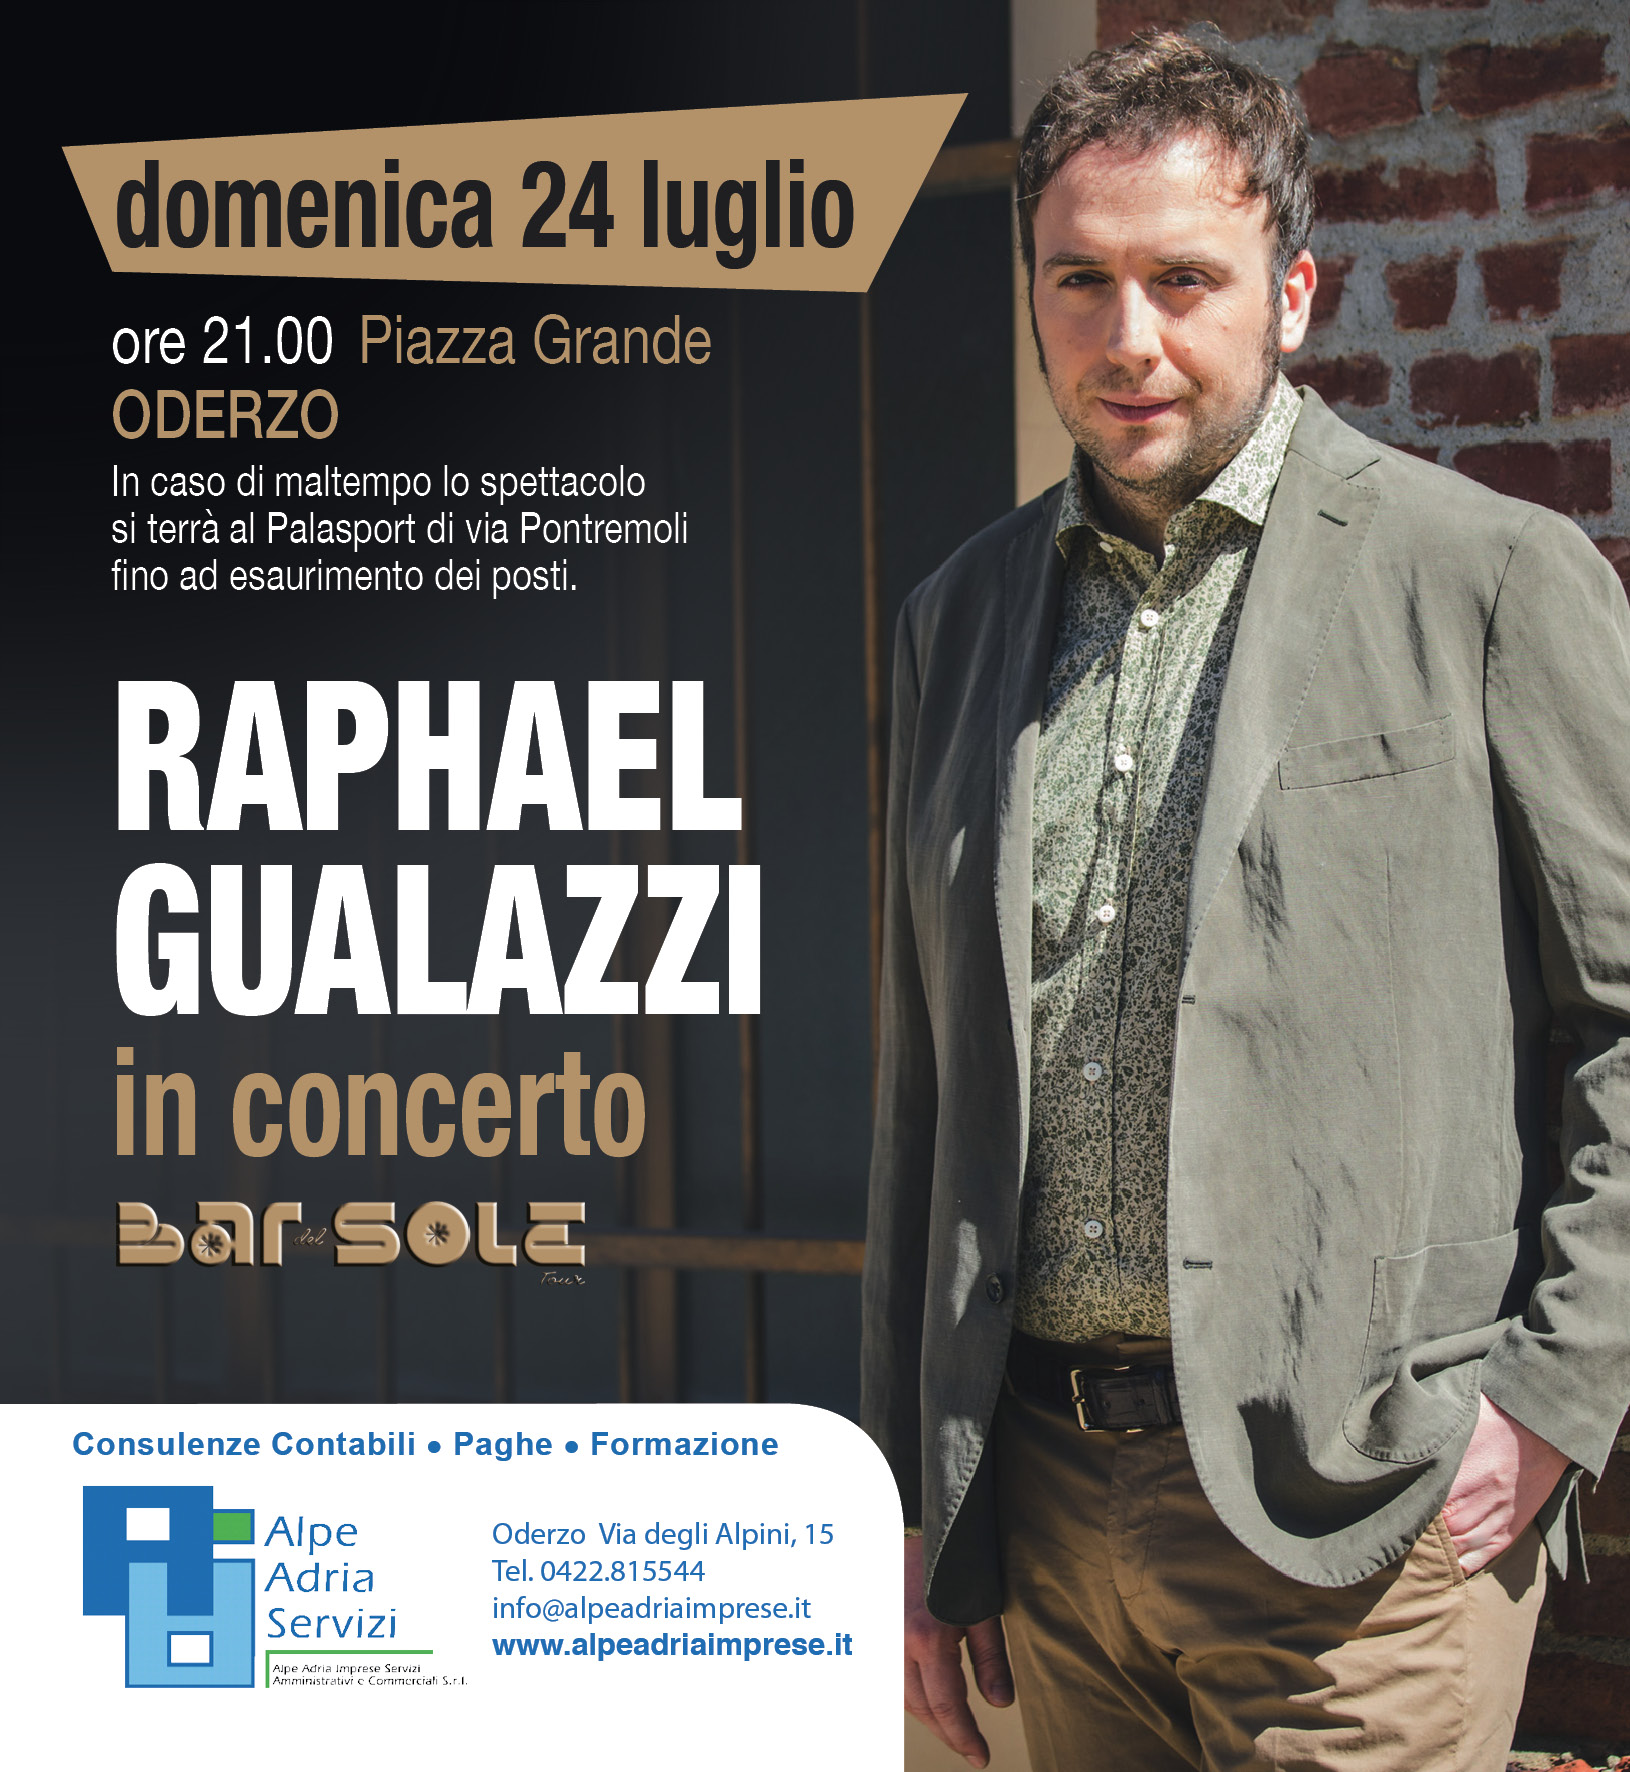 🎵 Raphael Gualazzi in concerto 🎵
L...